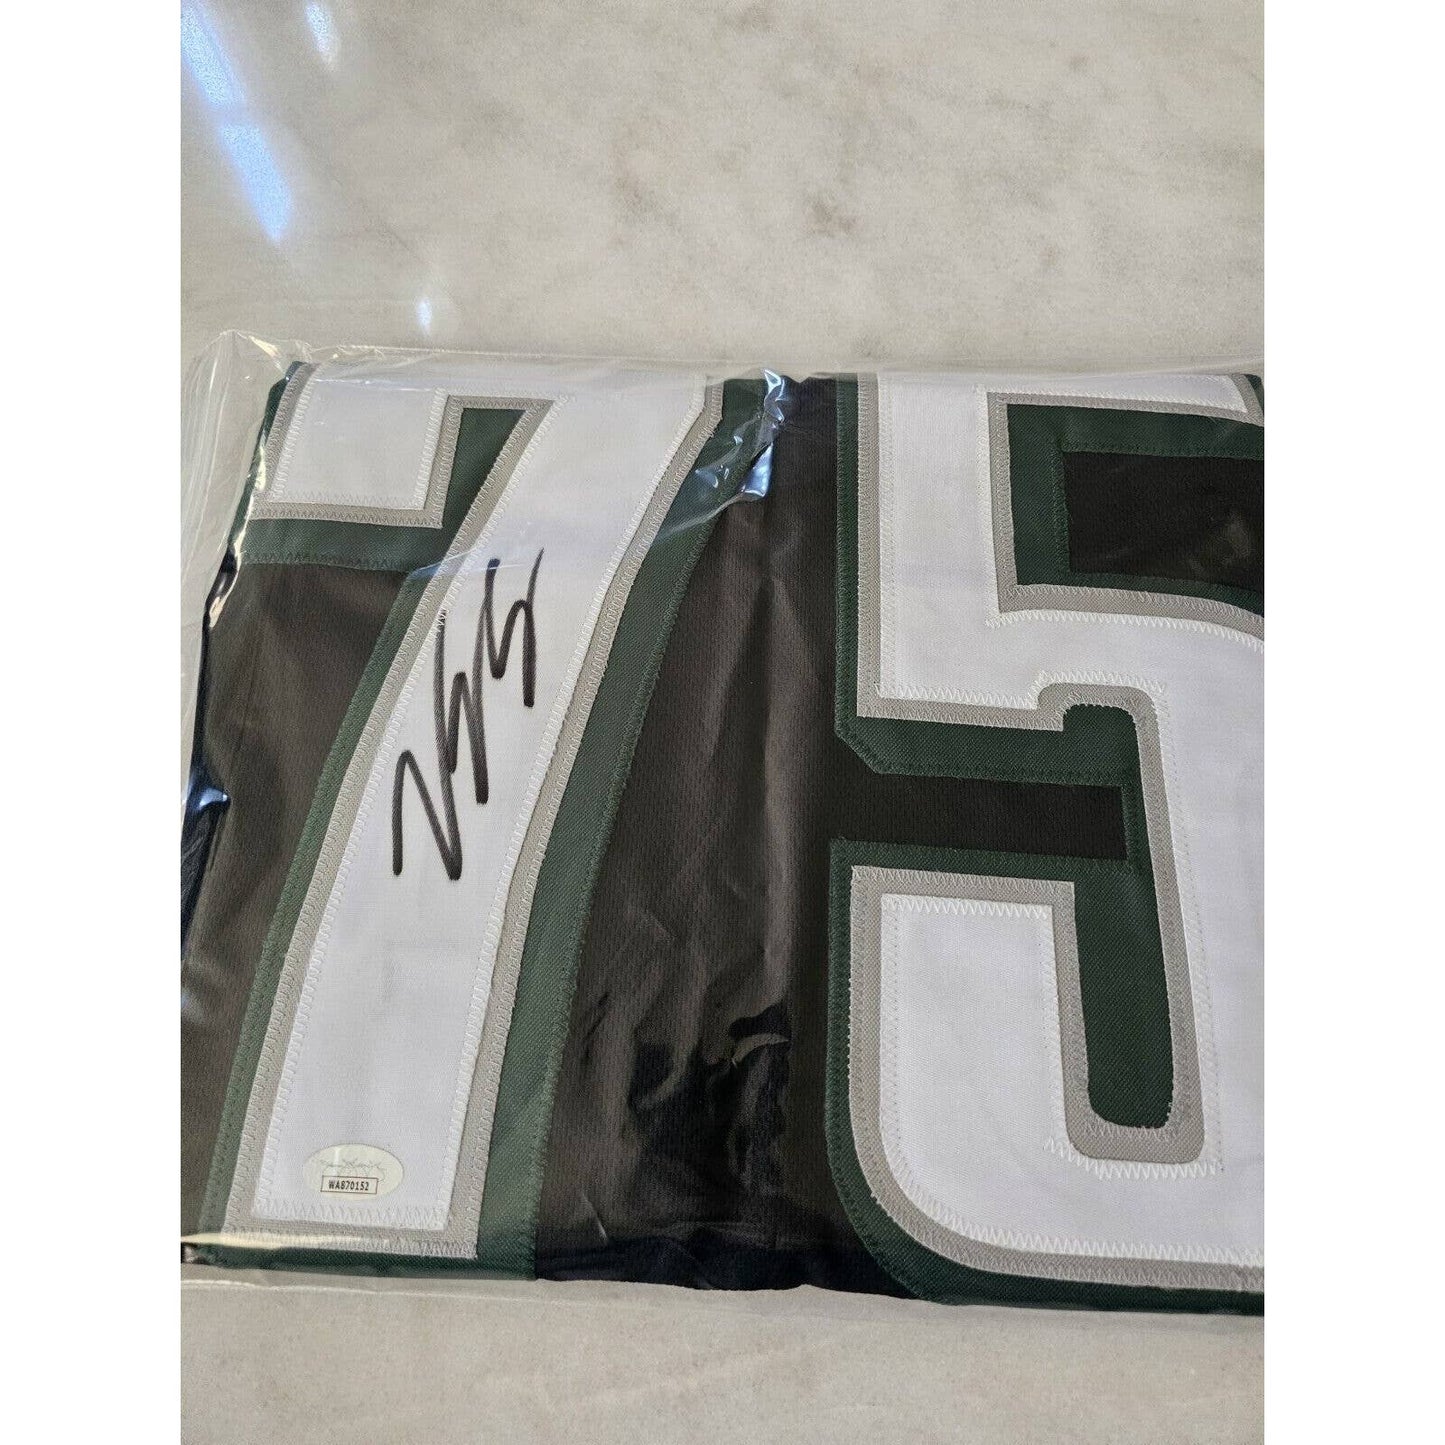 Vinny Curry Autographed/Signed Jersey JSA COA Philadelphia Eagles